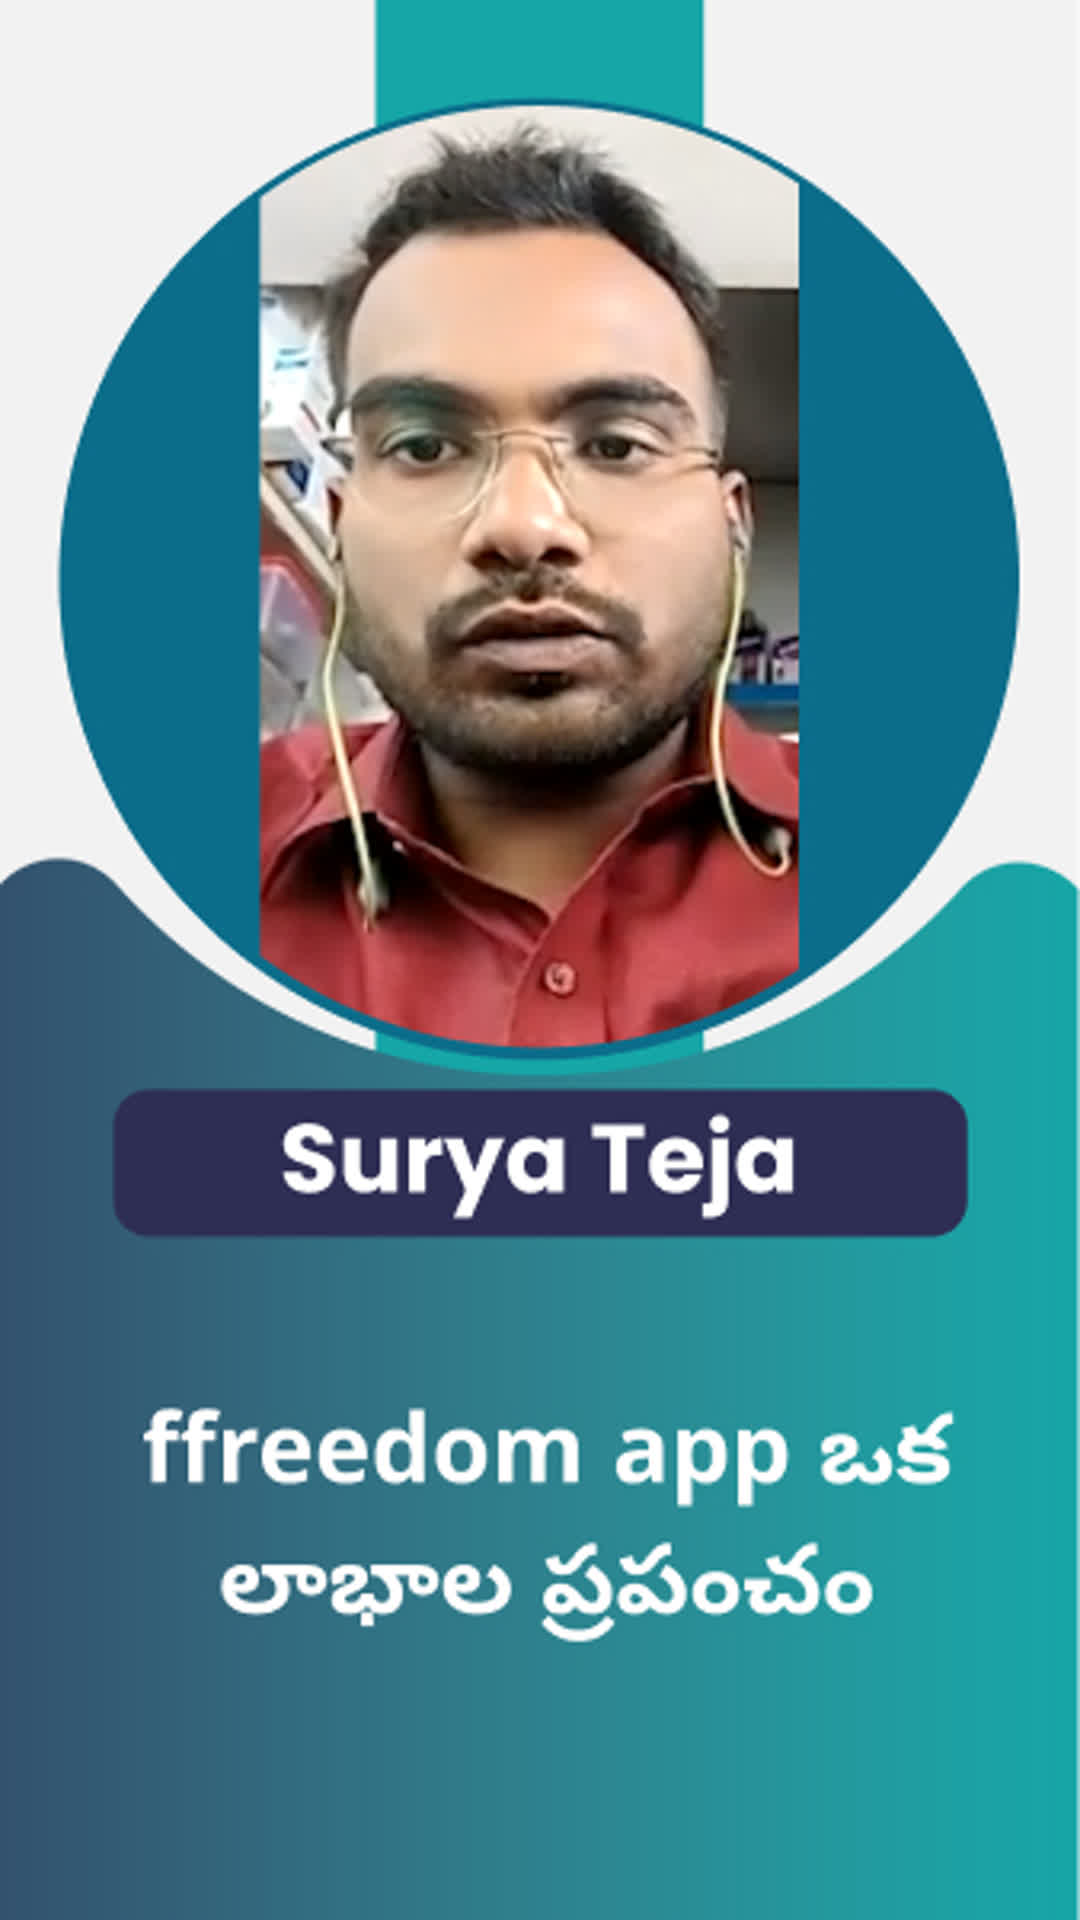 VISSAMSETTYSURYATEJA's Honest Review of ffreedom app - Guntur ,Andhra Pradesh